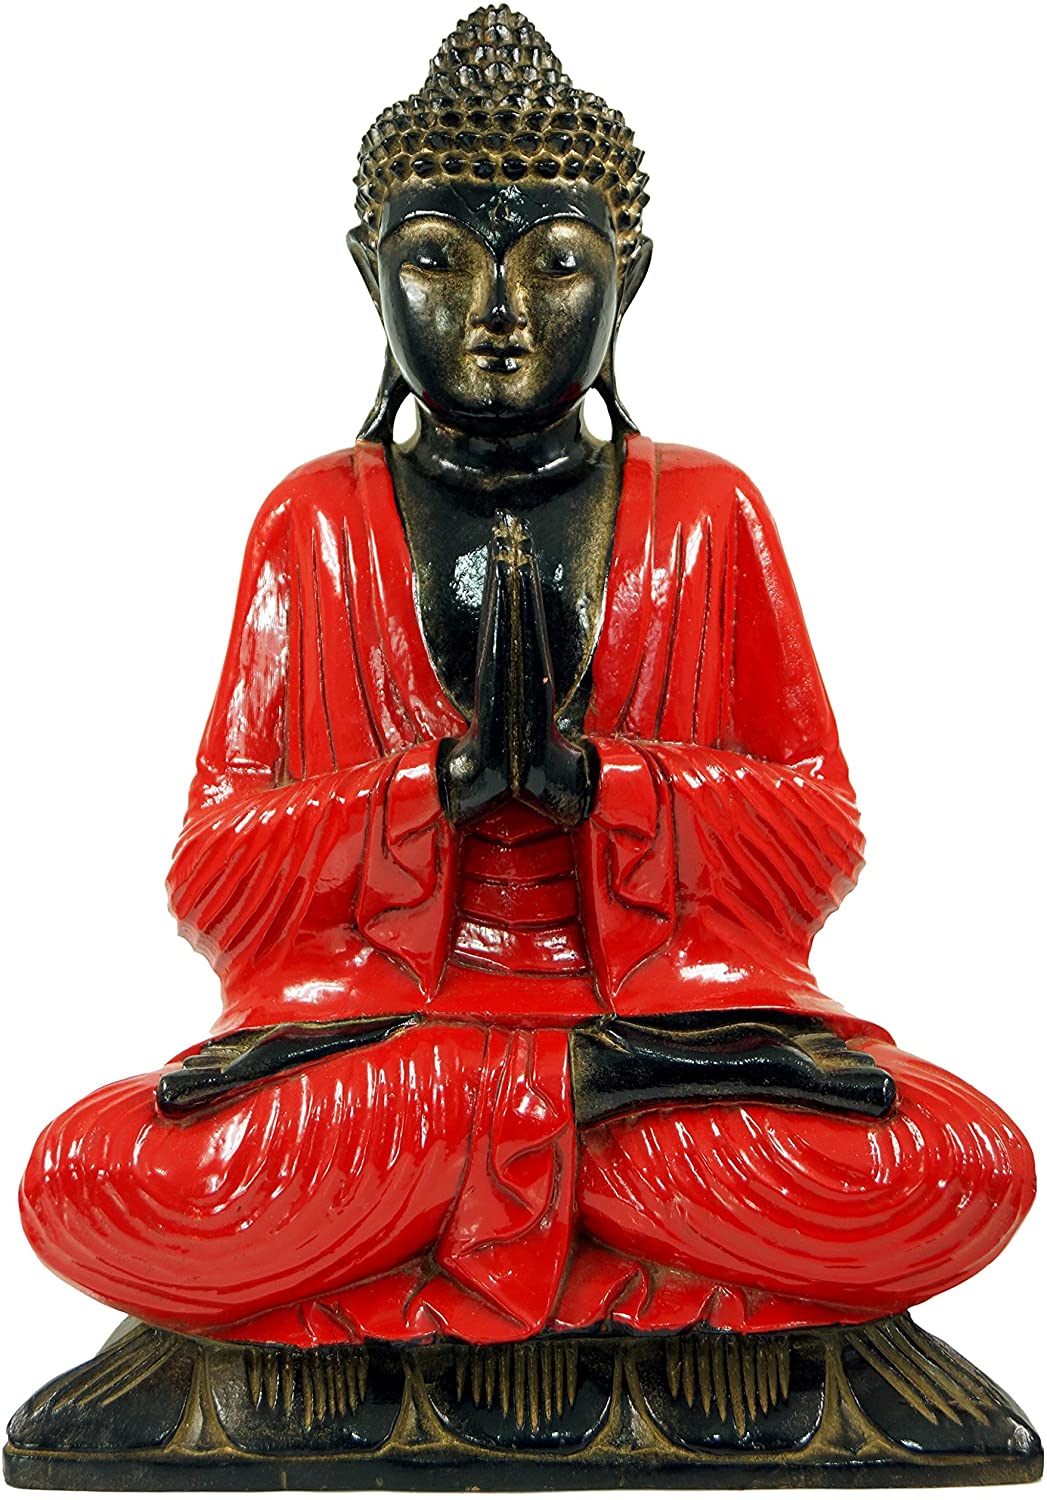 GURU SHOP Carved Sitting Buddha in Anjali Mudra, Red, 50 x 35 x 17 cm, Buddhas